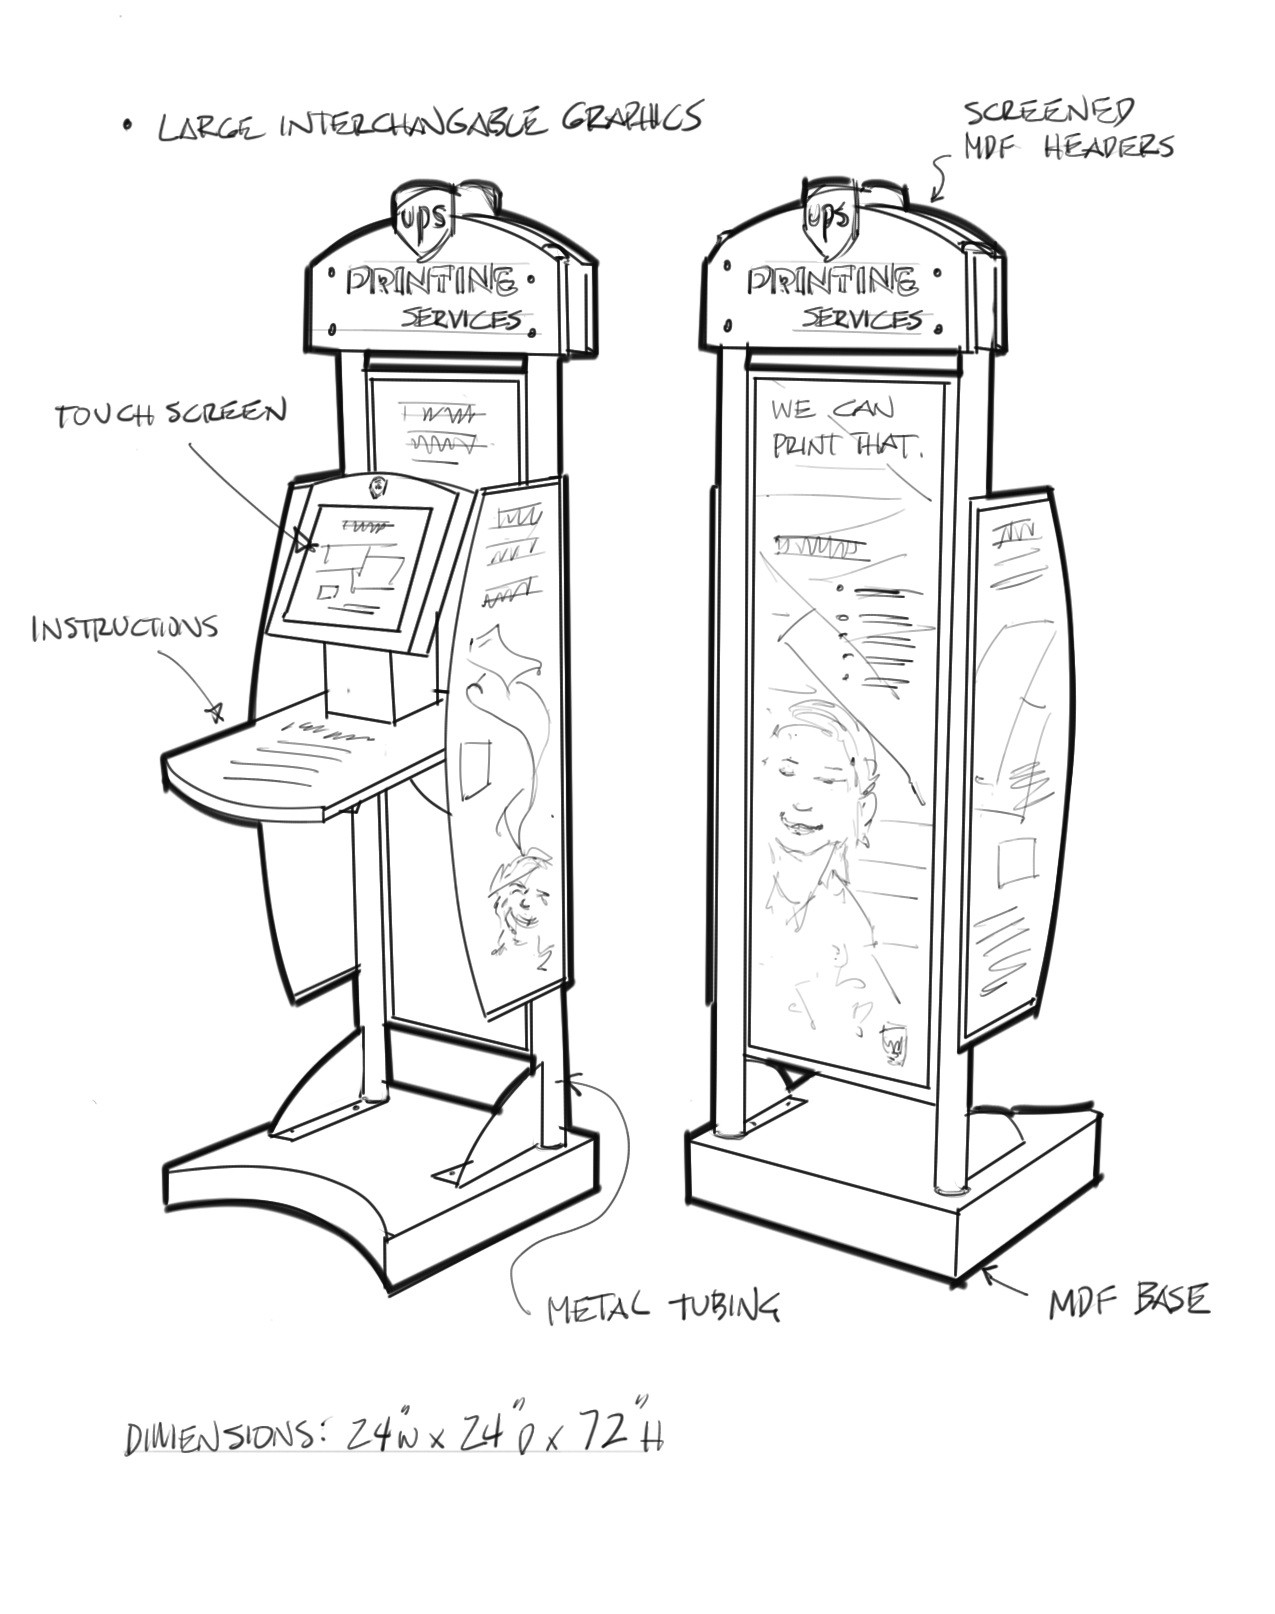 UPS Store Kiosk Concept A.jpg